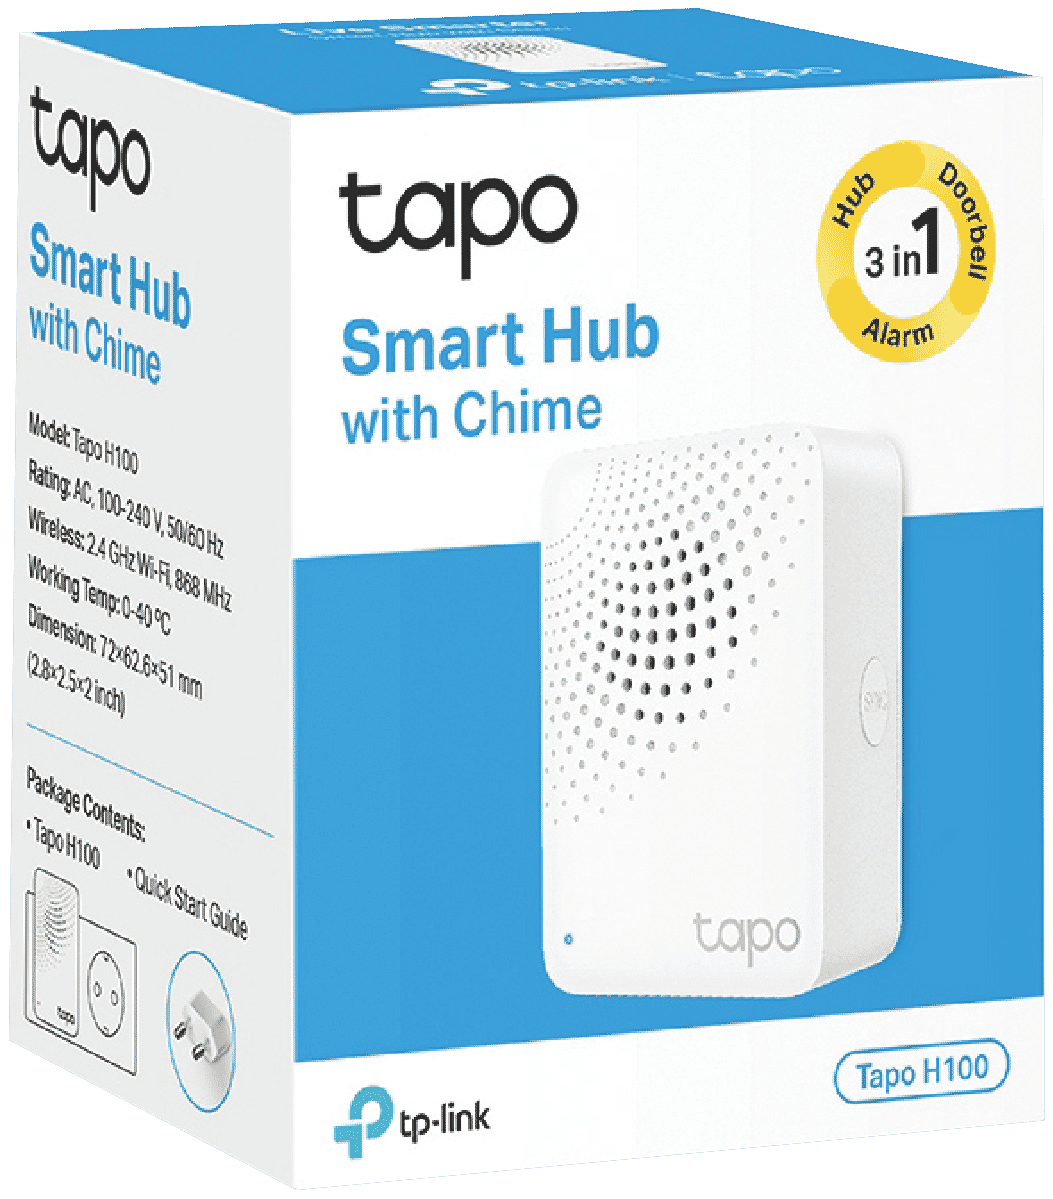 Taoo H100 Smart Hub with Chime